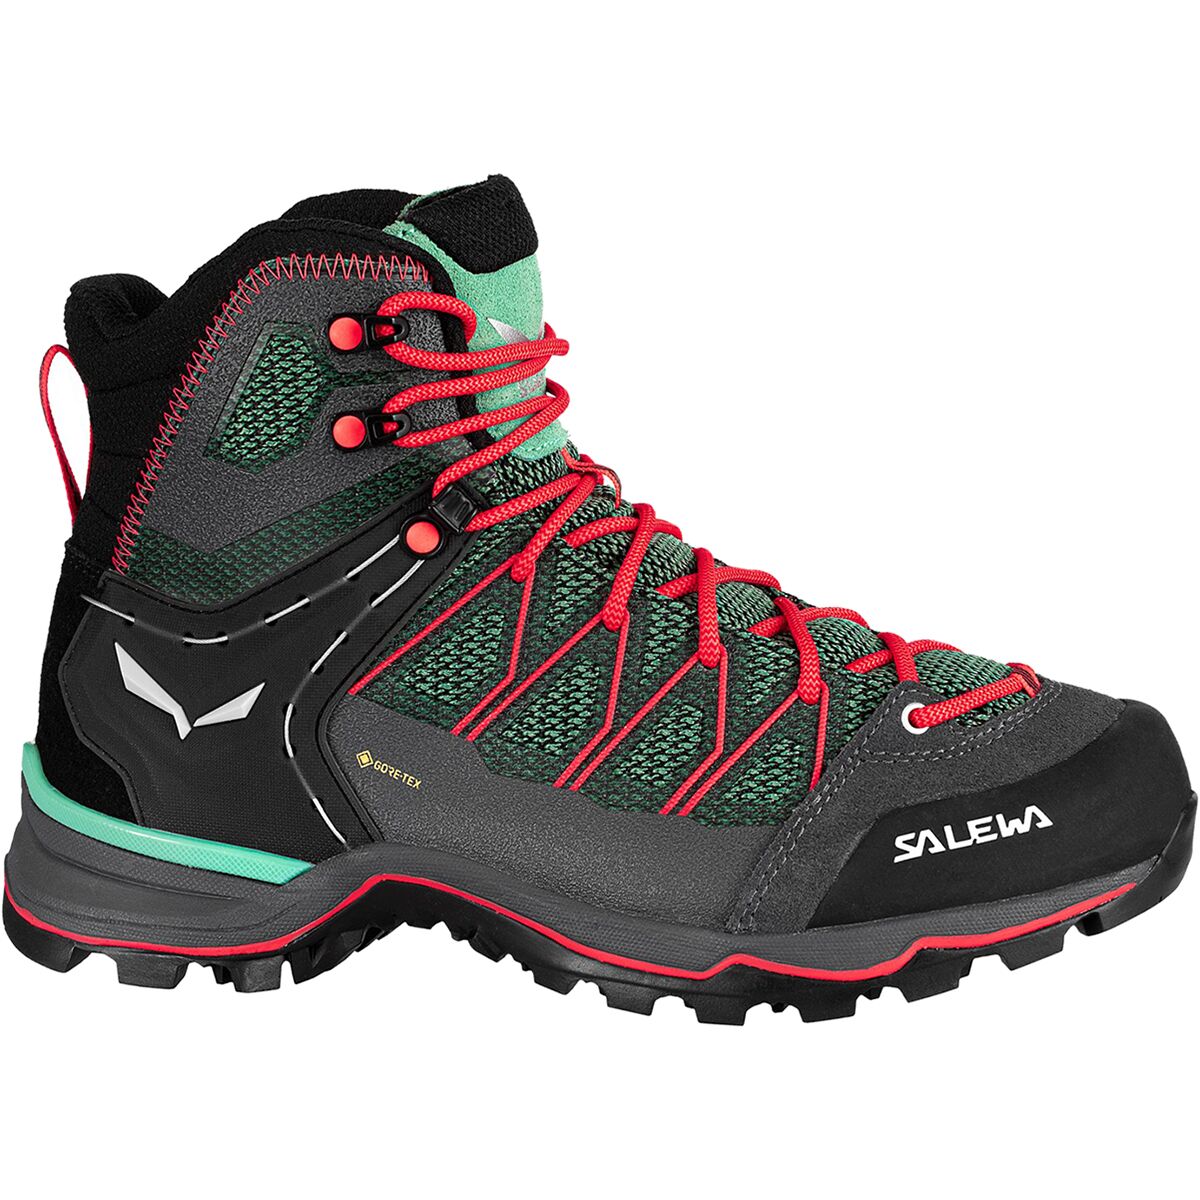 Salewa Mountain Trainer Lite Mid GTX Hiking Boot - Women's